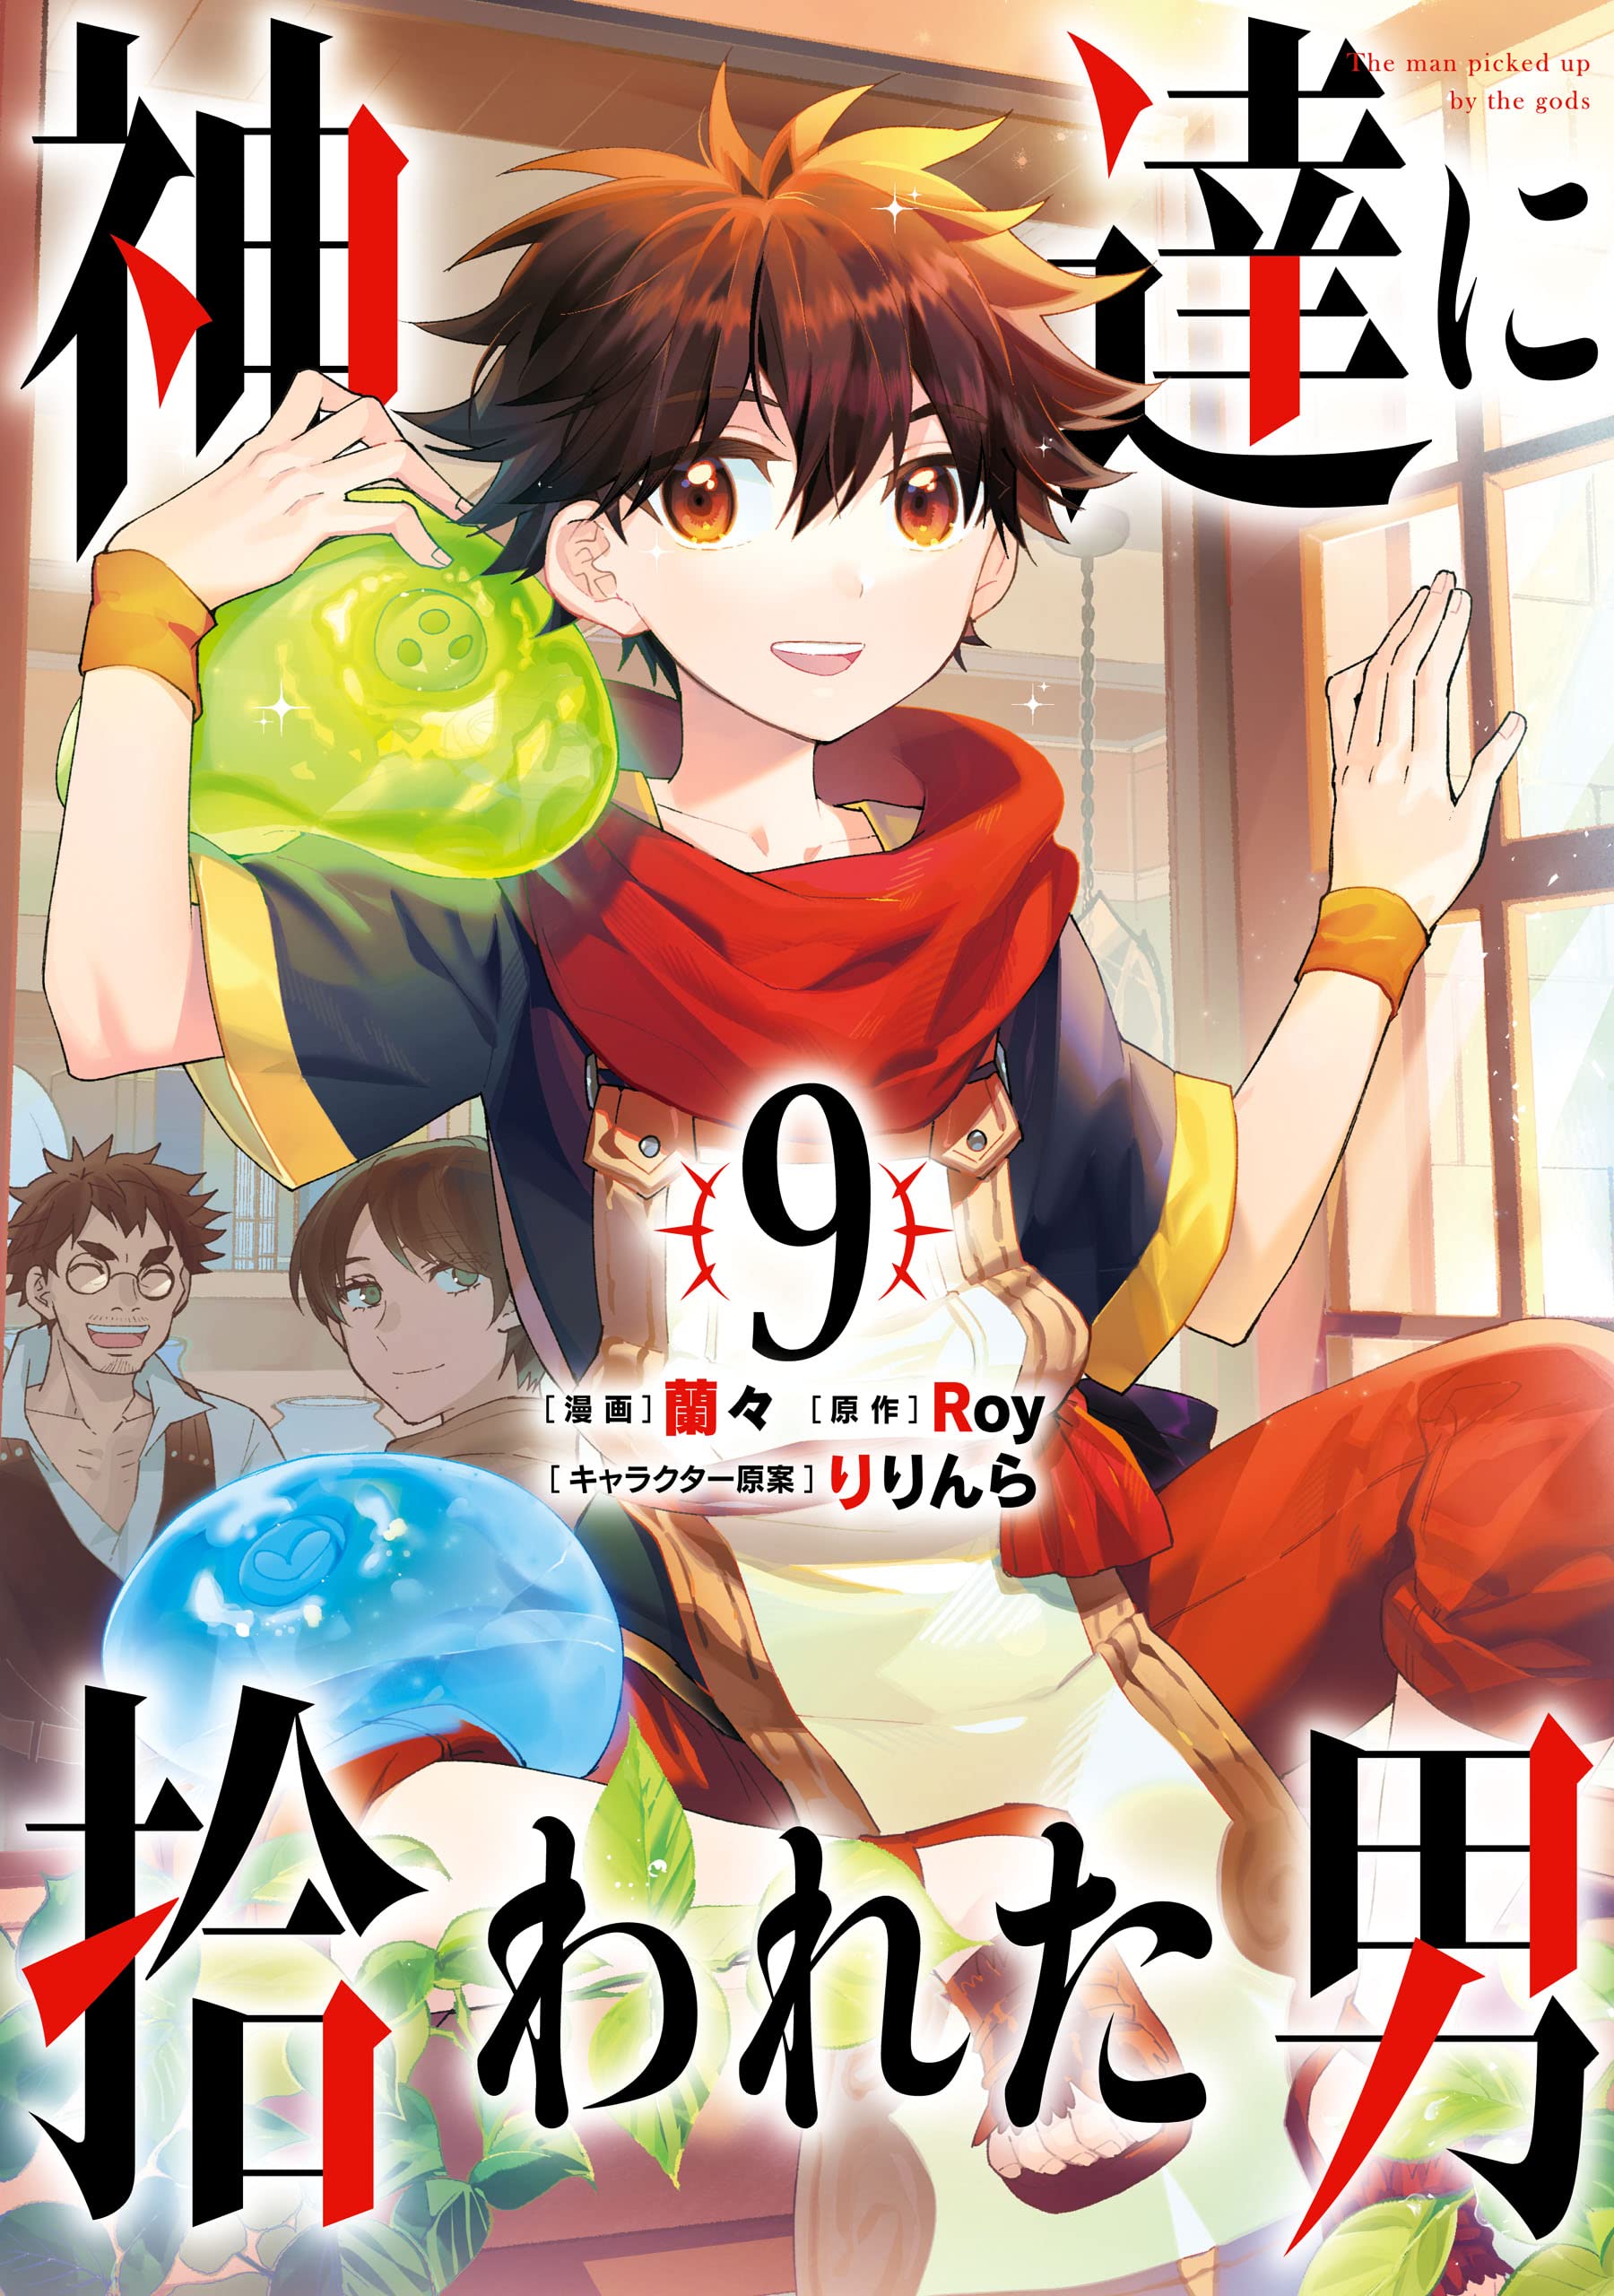 Kamitachi Ni Hirowareta Otoko Chapter 47 Release Date, Countdown